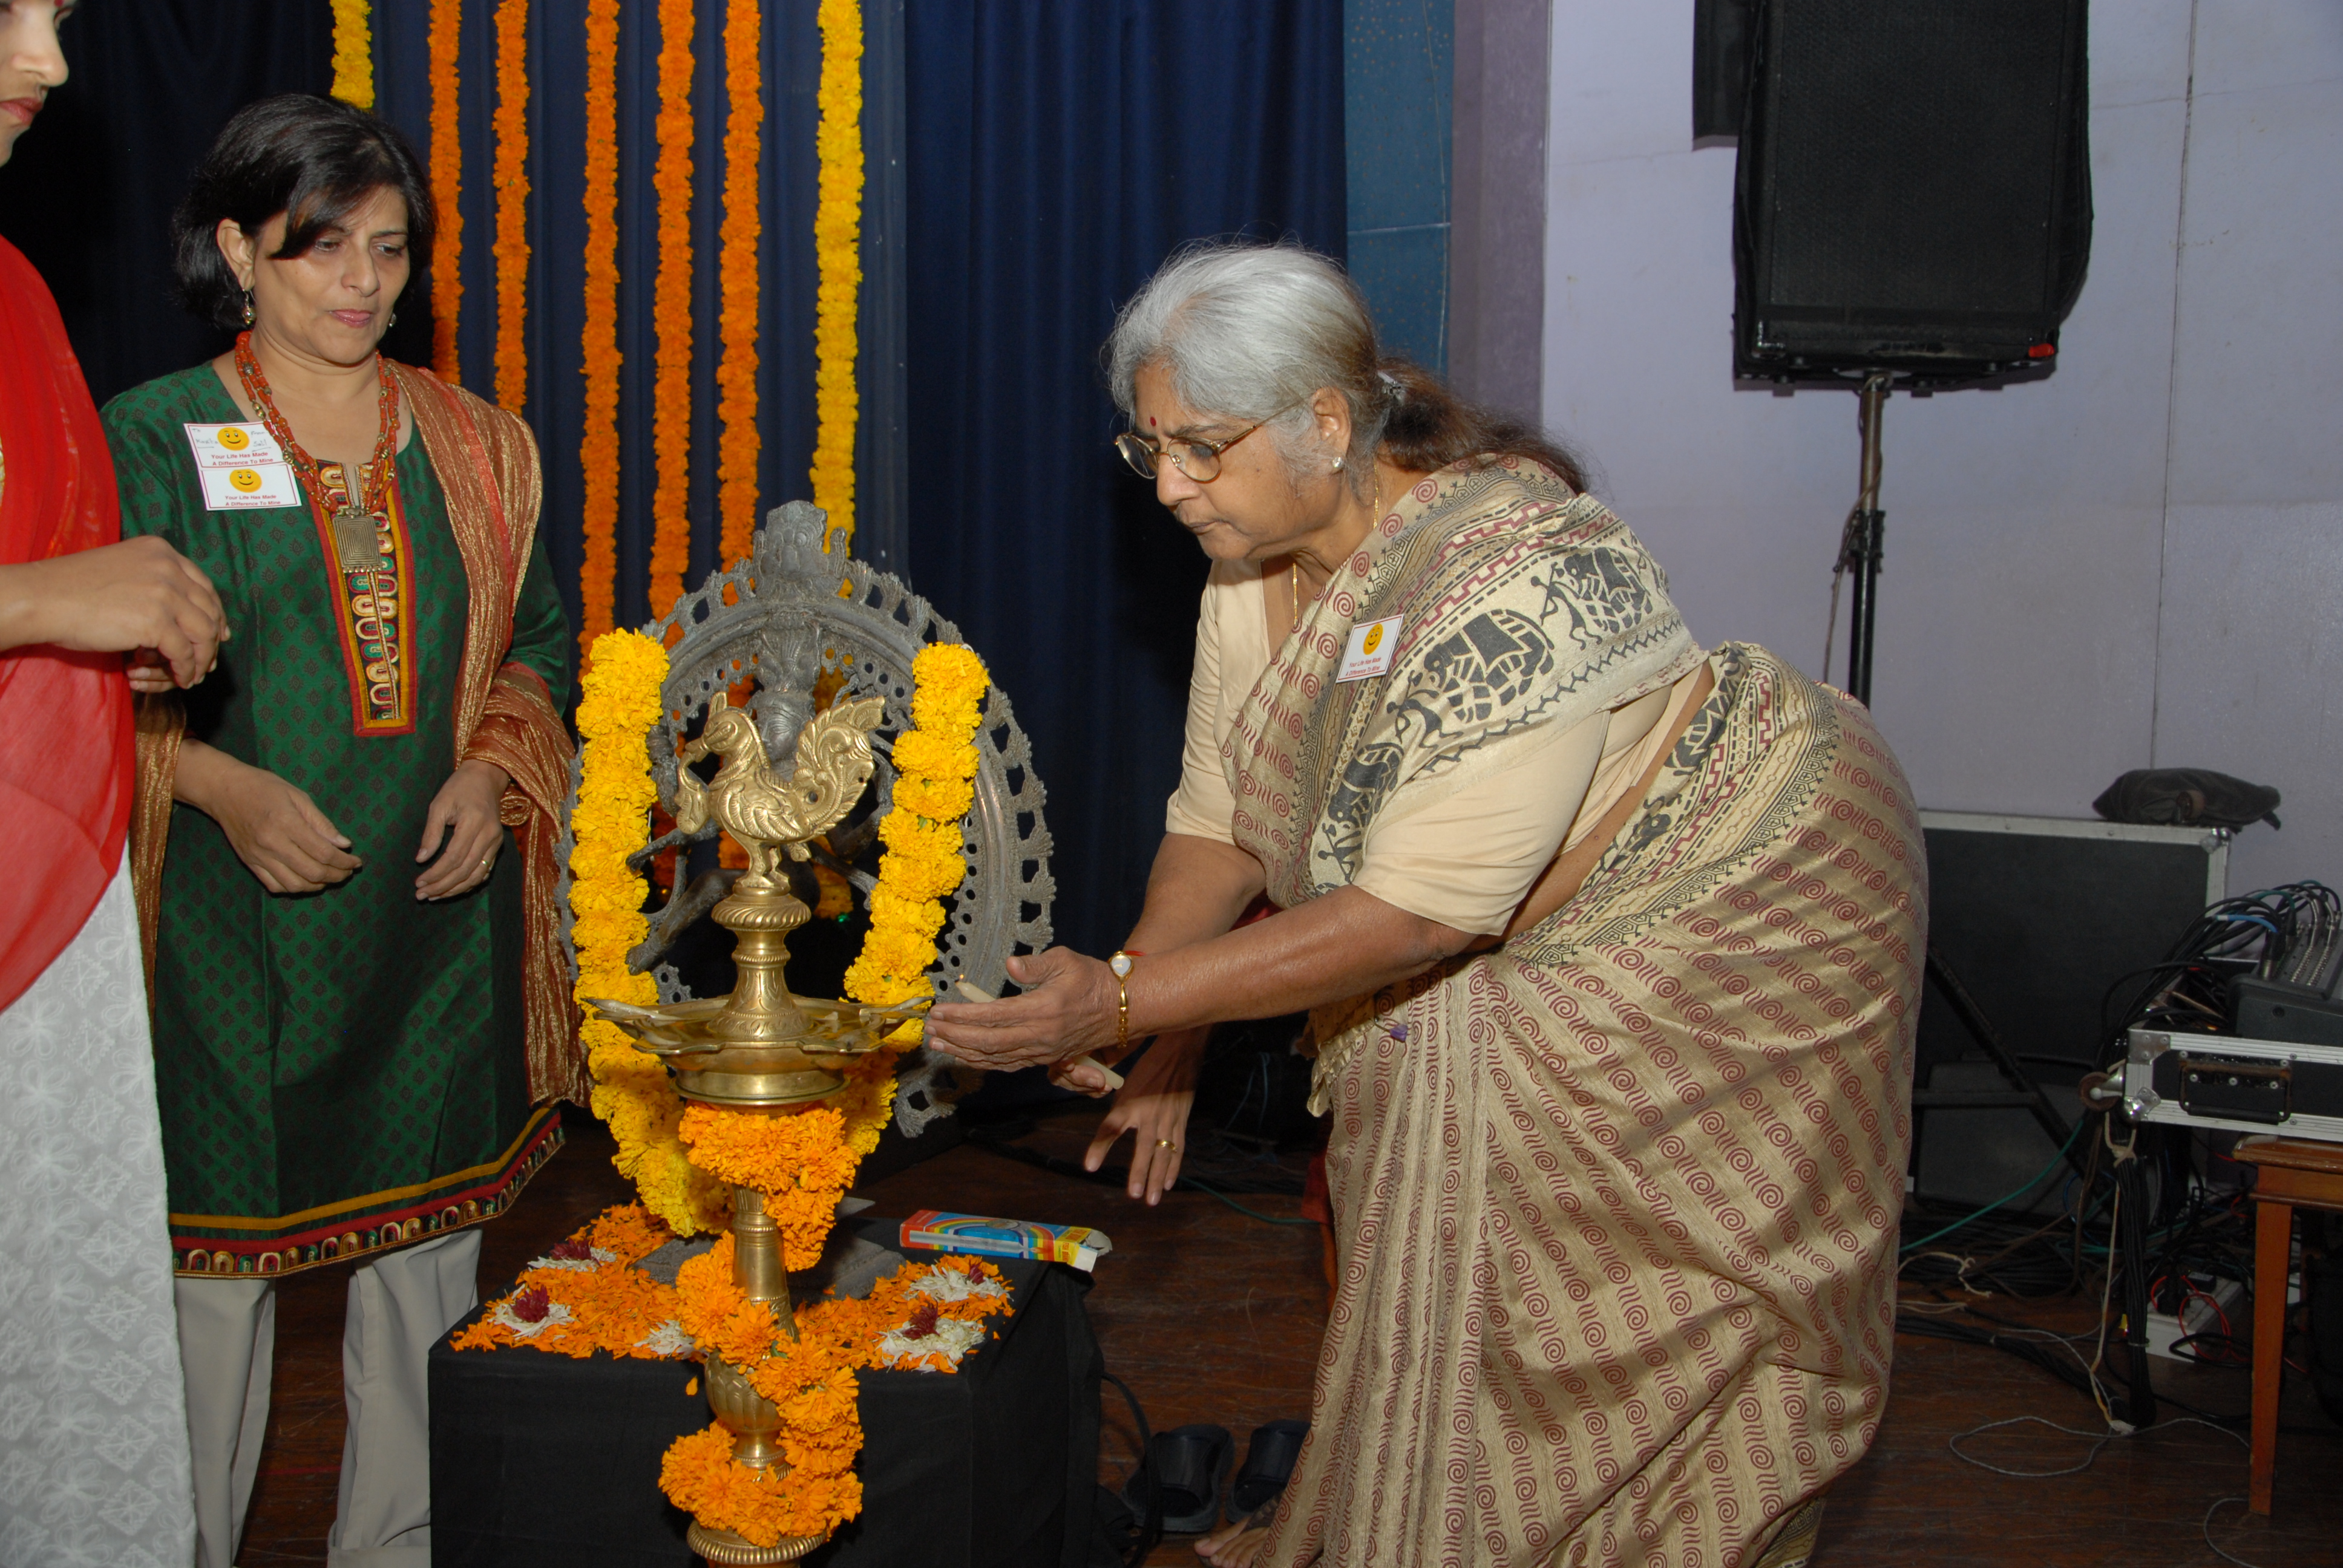 Dr. Shah lights the inaugural lamp